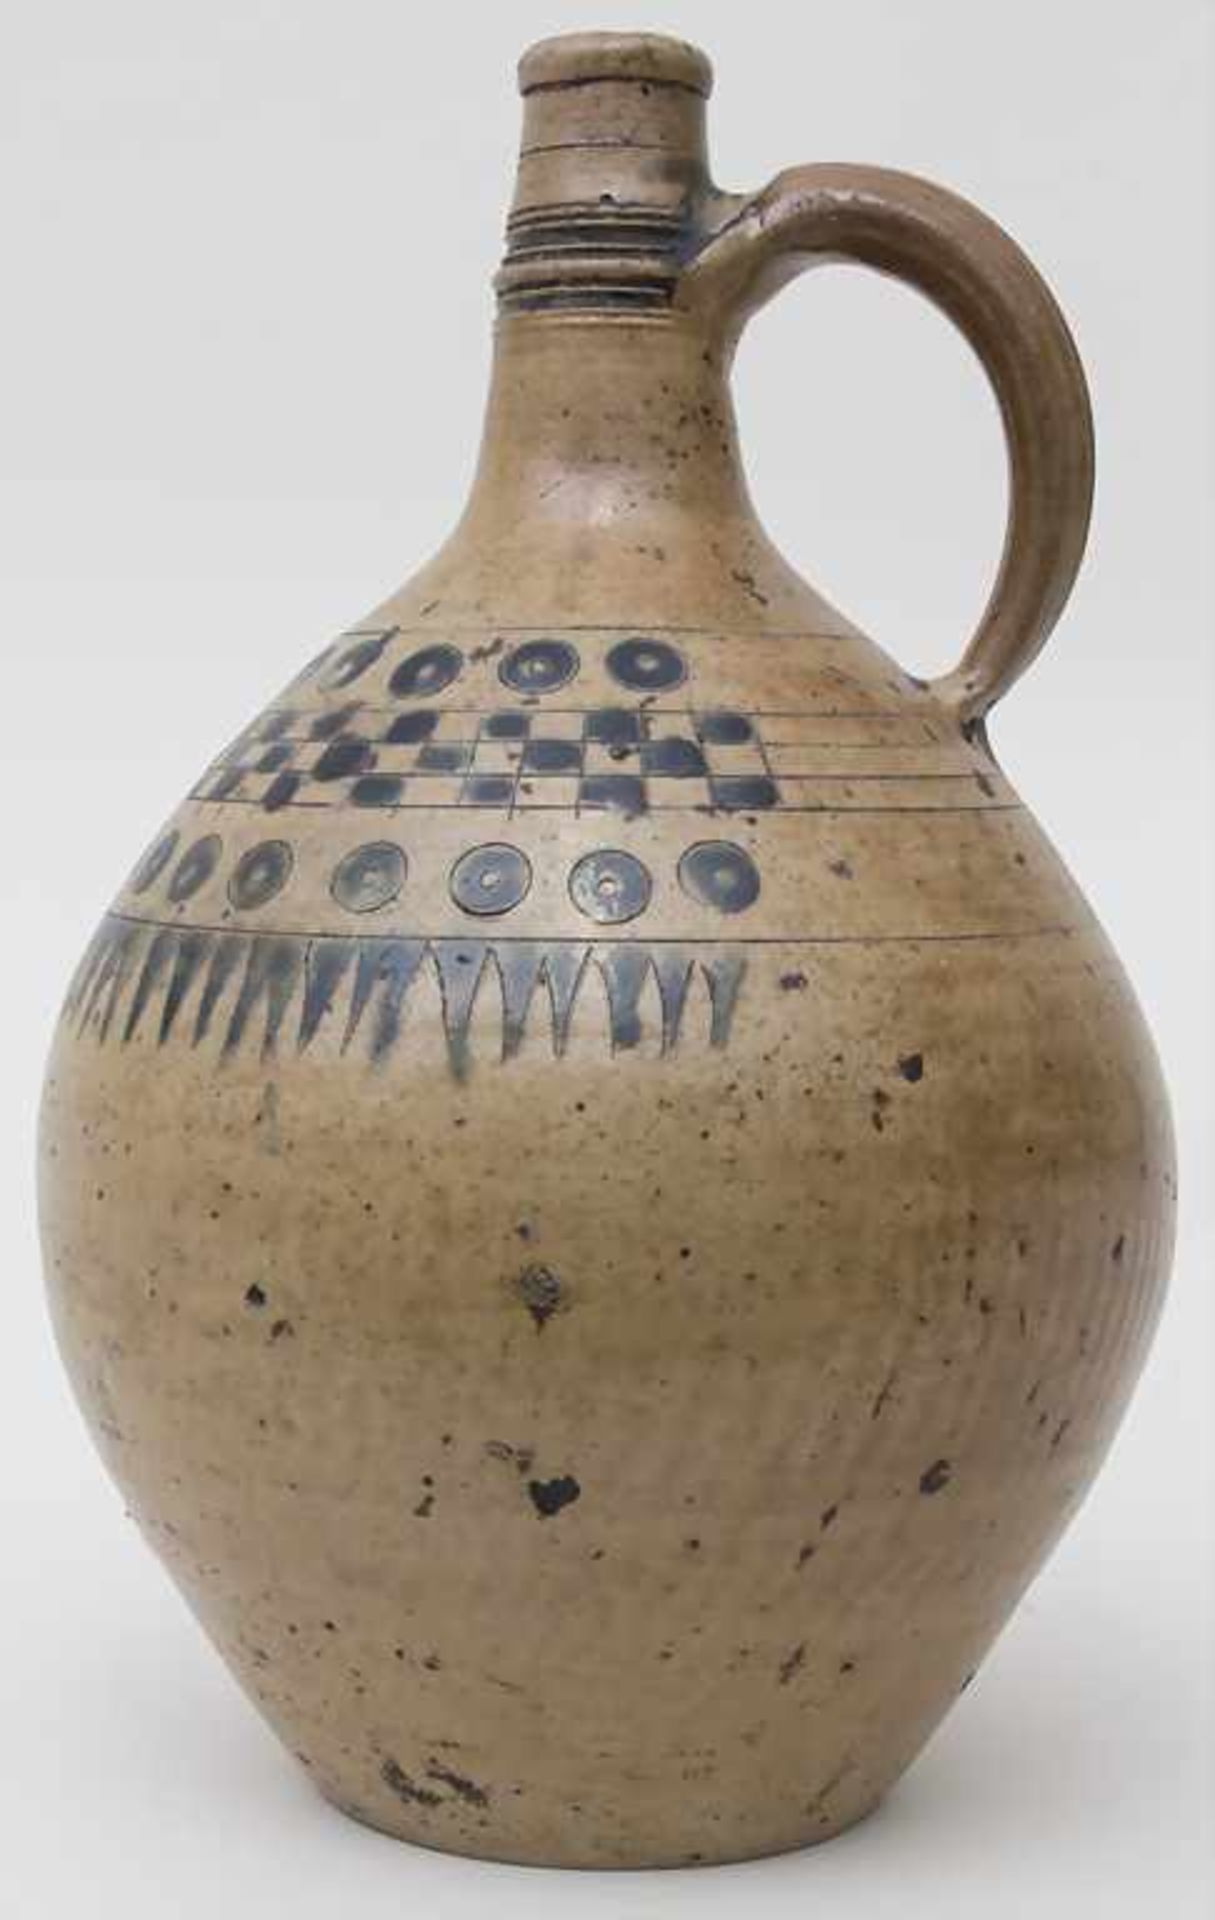 Ölkrug mit geometrischem Dekor / An oil jug with geometrical patternsMaterial: Keramik, hellbraun